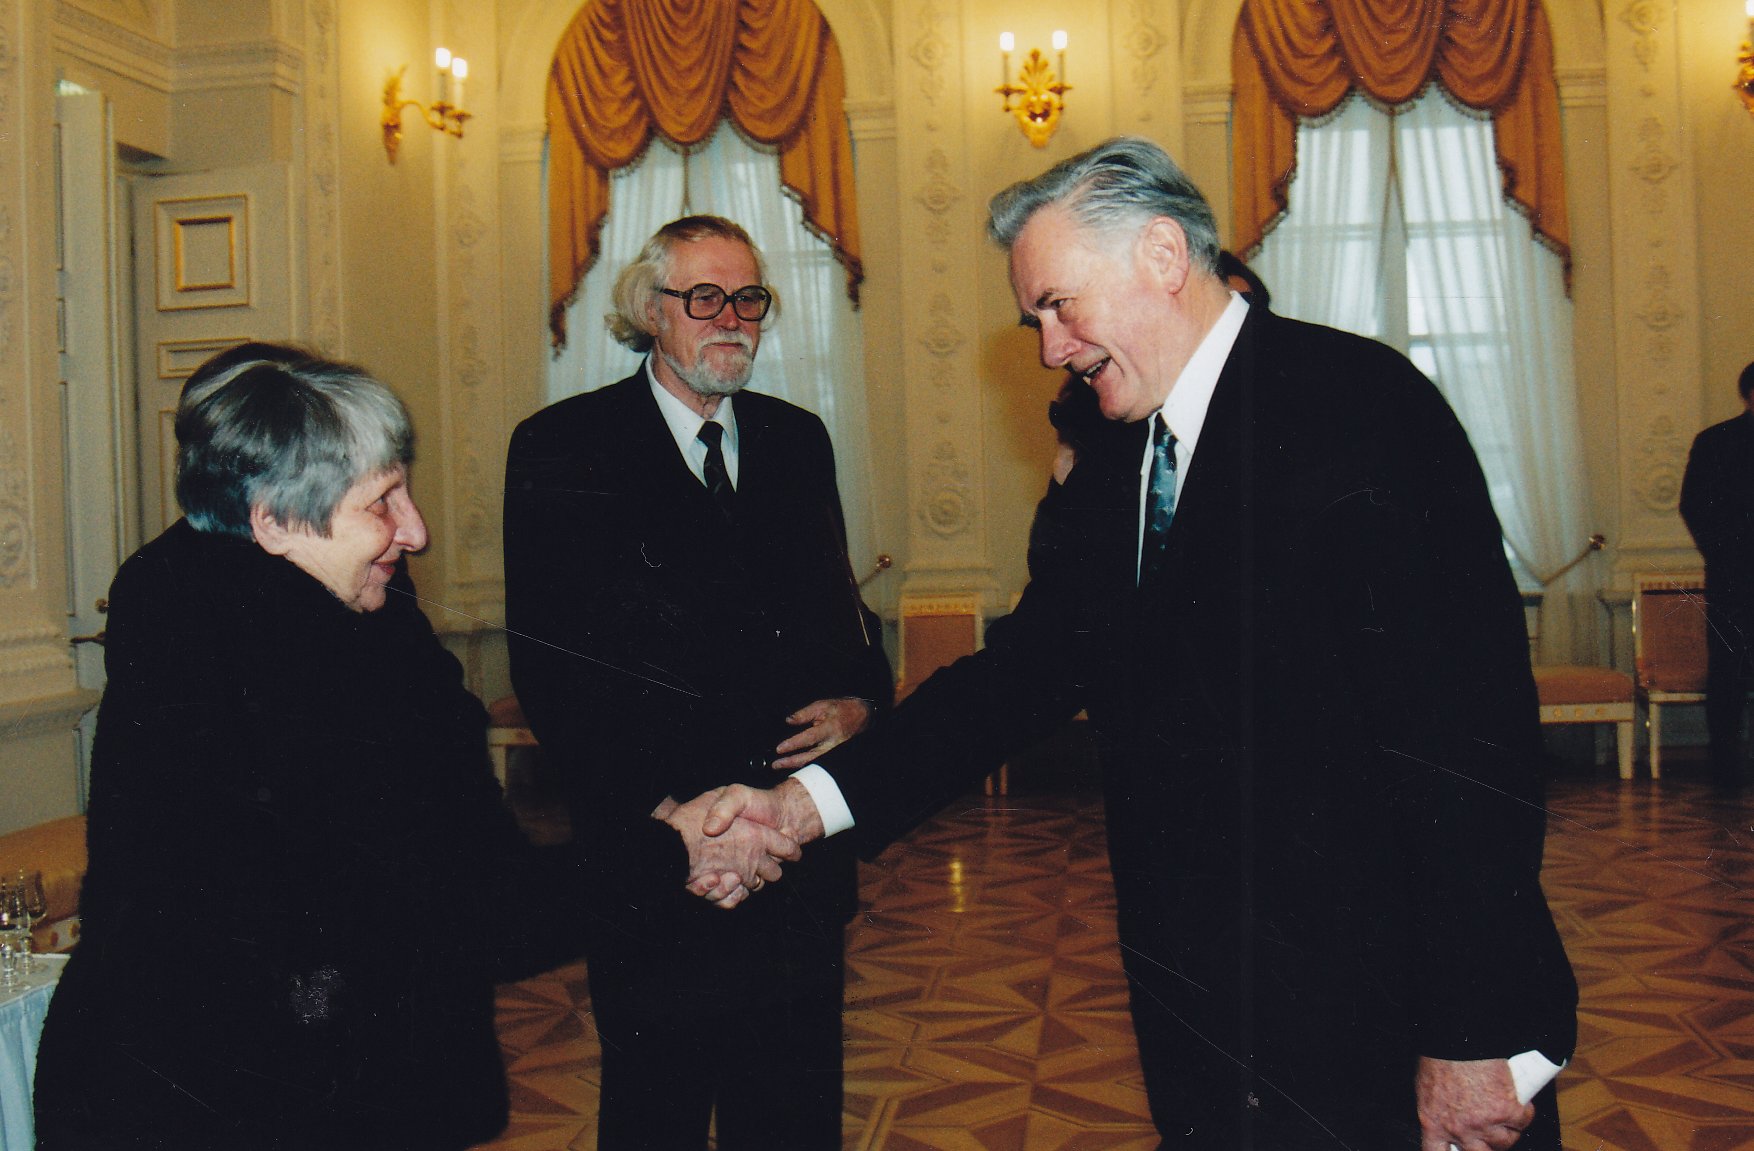 V. Zaborskaitė prezidentūroje 1999 m. gruodžio 31 d. Iš kairės: V. Zaborskaitė, M. Martinaitis, V. Adamkus. Fotografė D. Barysaitė. MLLM 77925 F3 10464